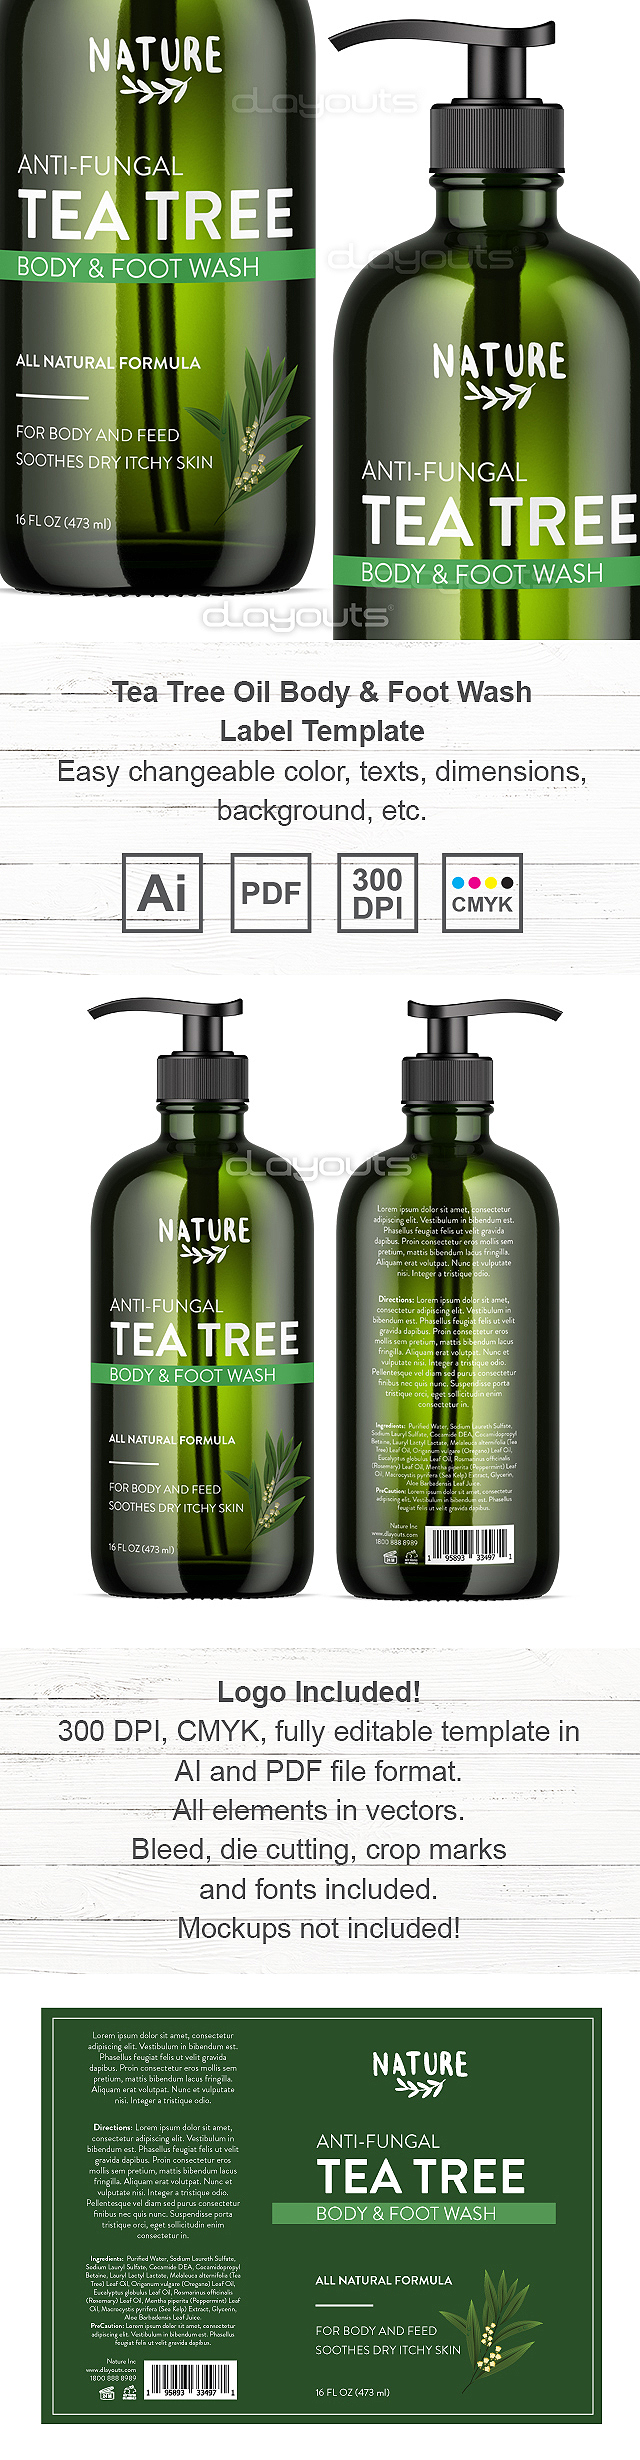 Tea Tree Oil Body & Foot Wash Label Template